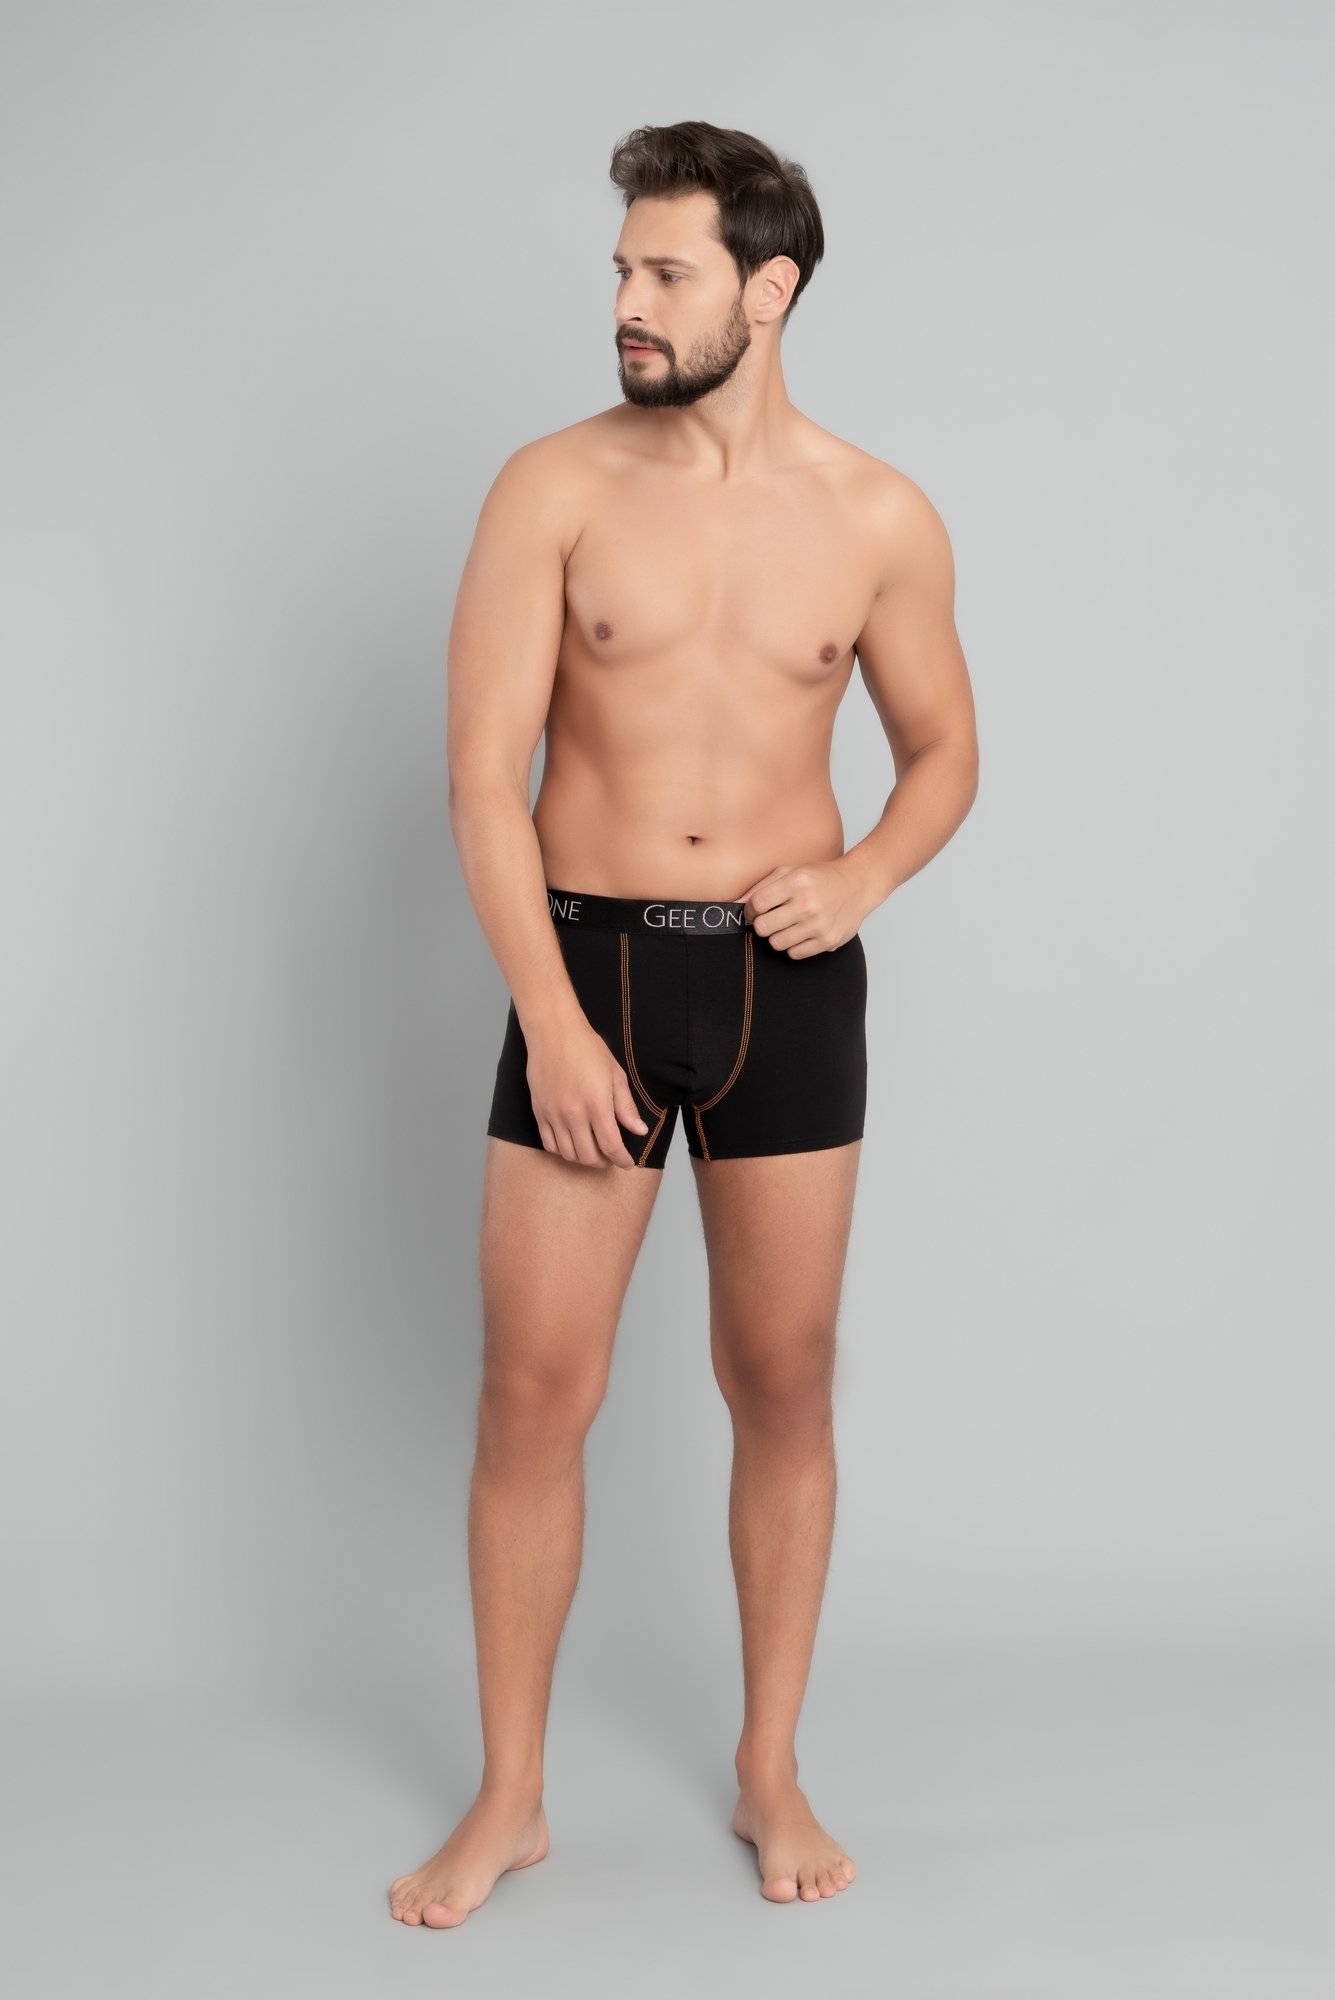 Men's Fluo Boxer Shorts - Black/Fluo Orange